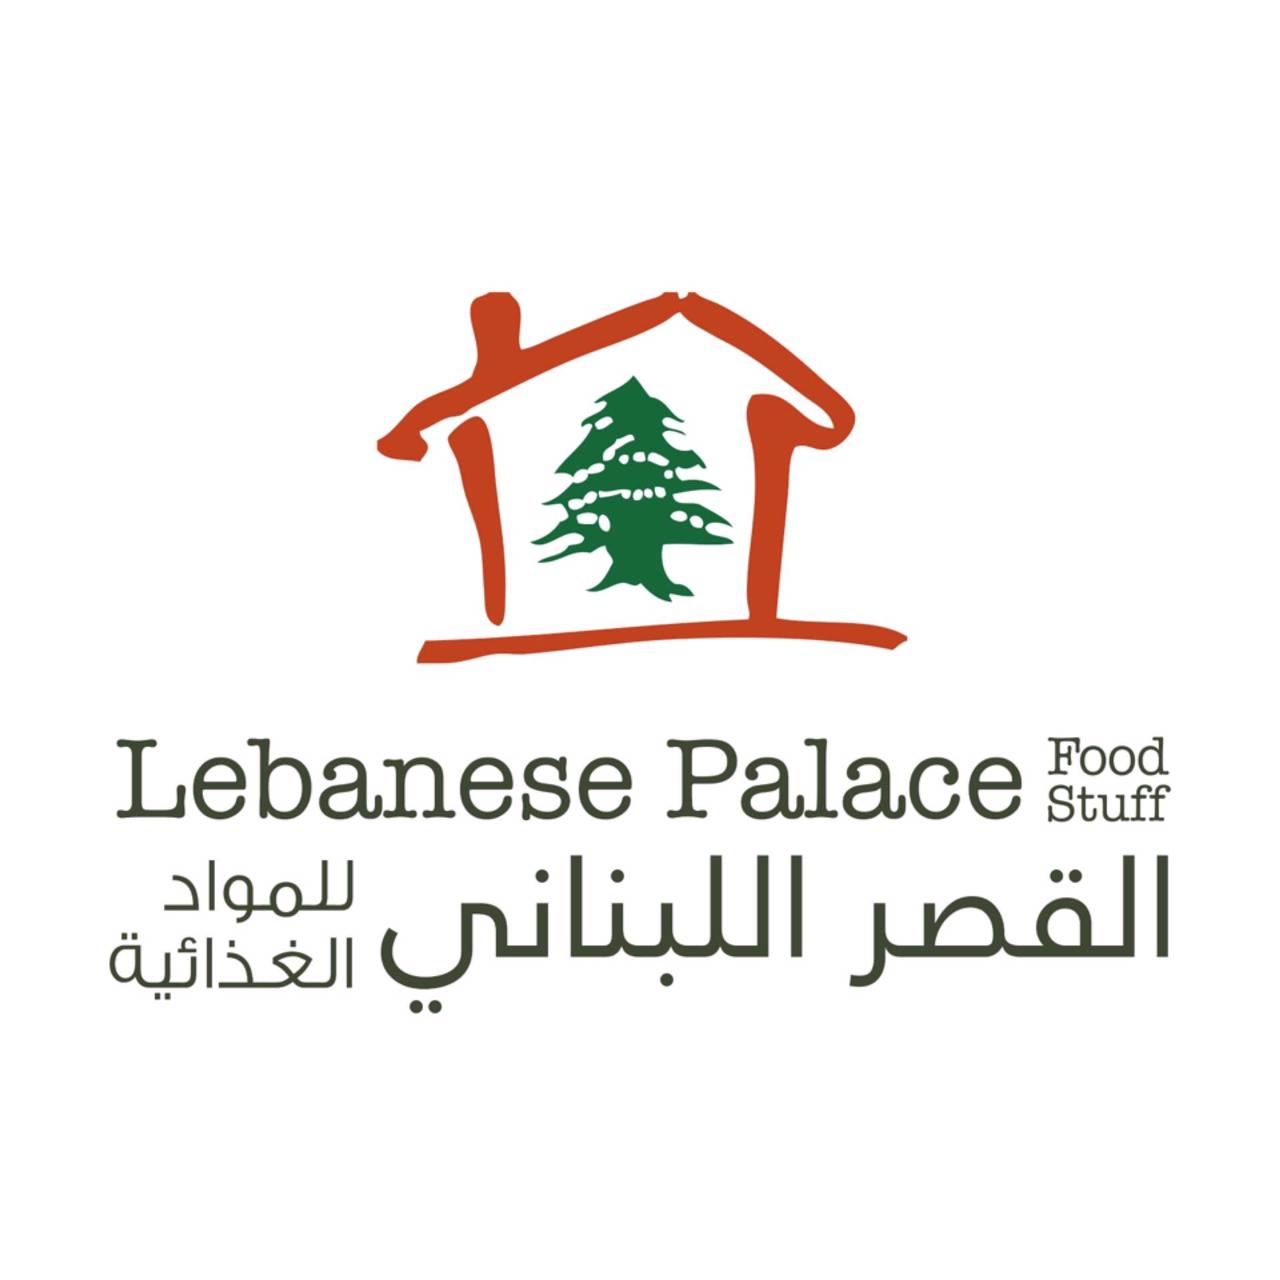 LebanesePalace